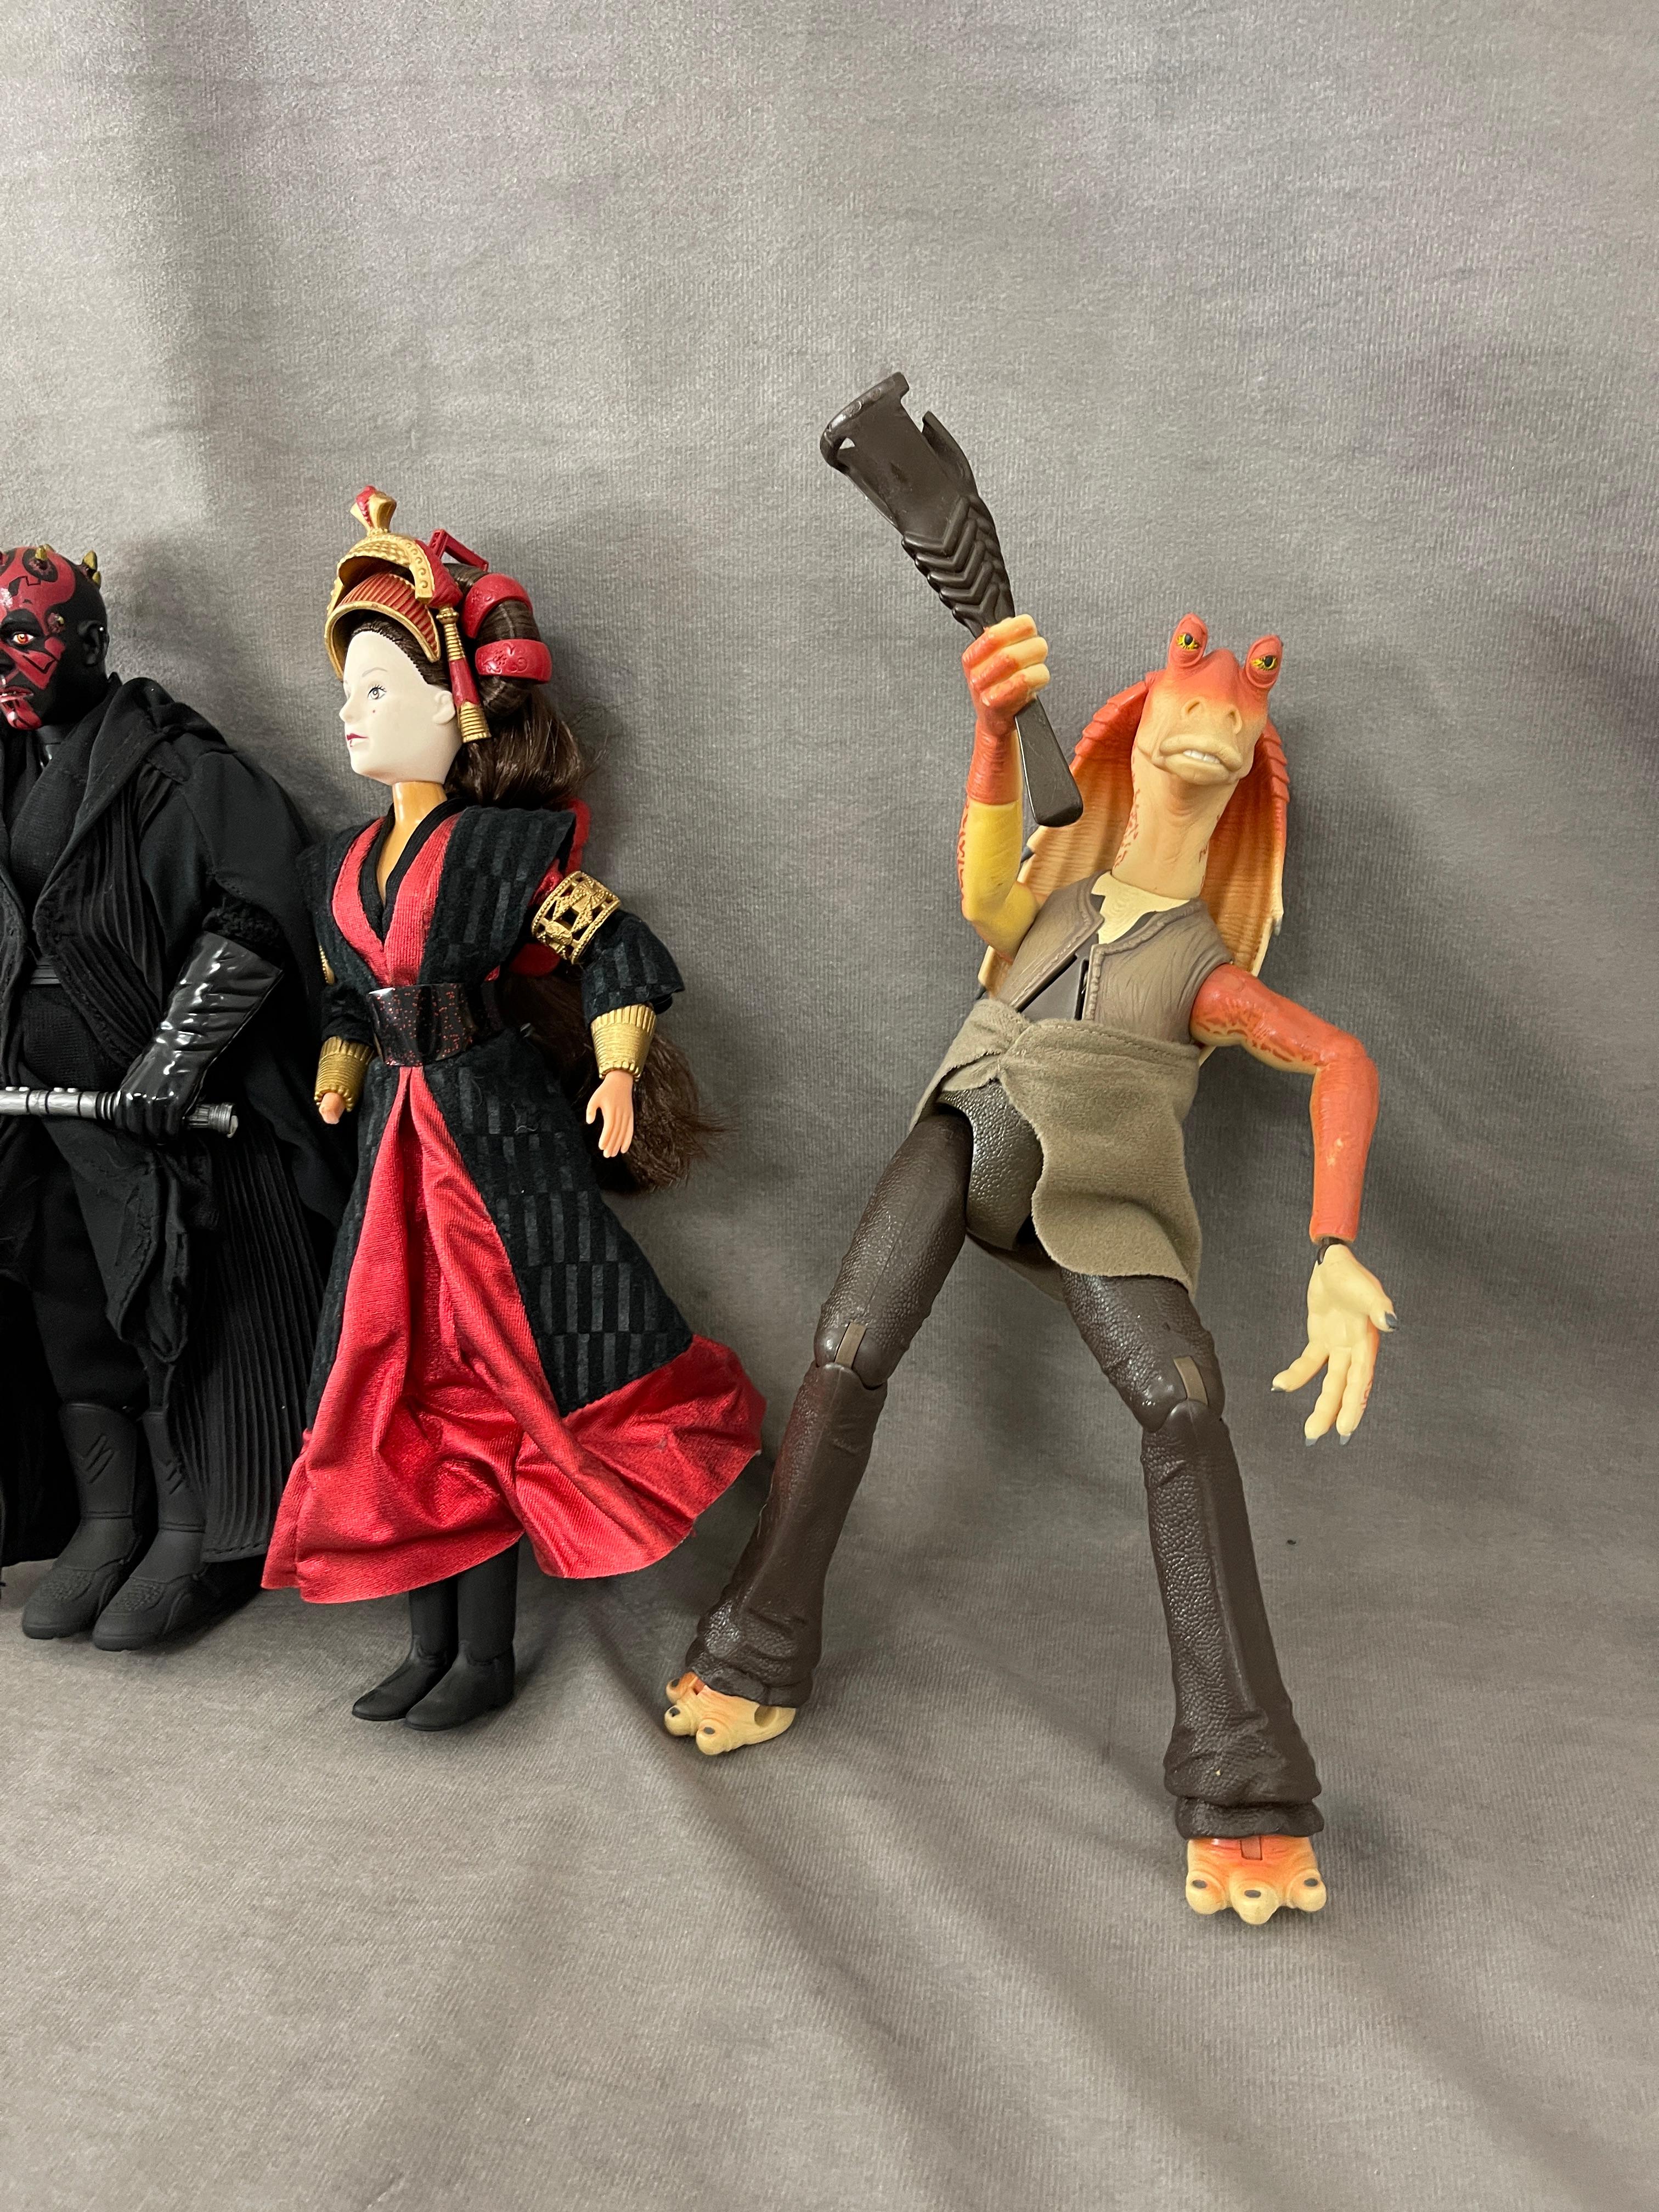 Star Wars Darth Maul Queen Amidala and Jar Jar Binks Action Figure Collection Lot